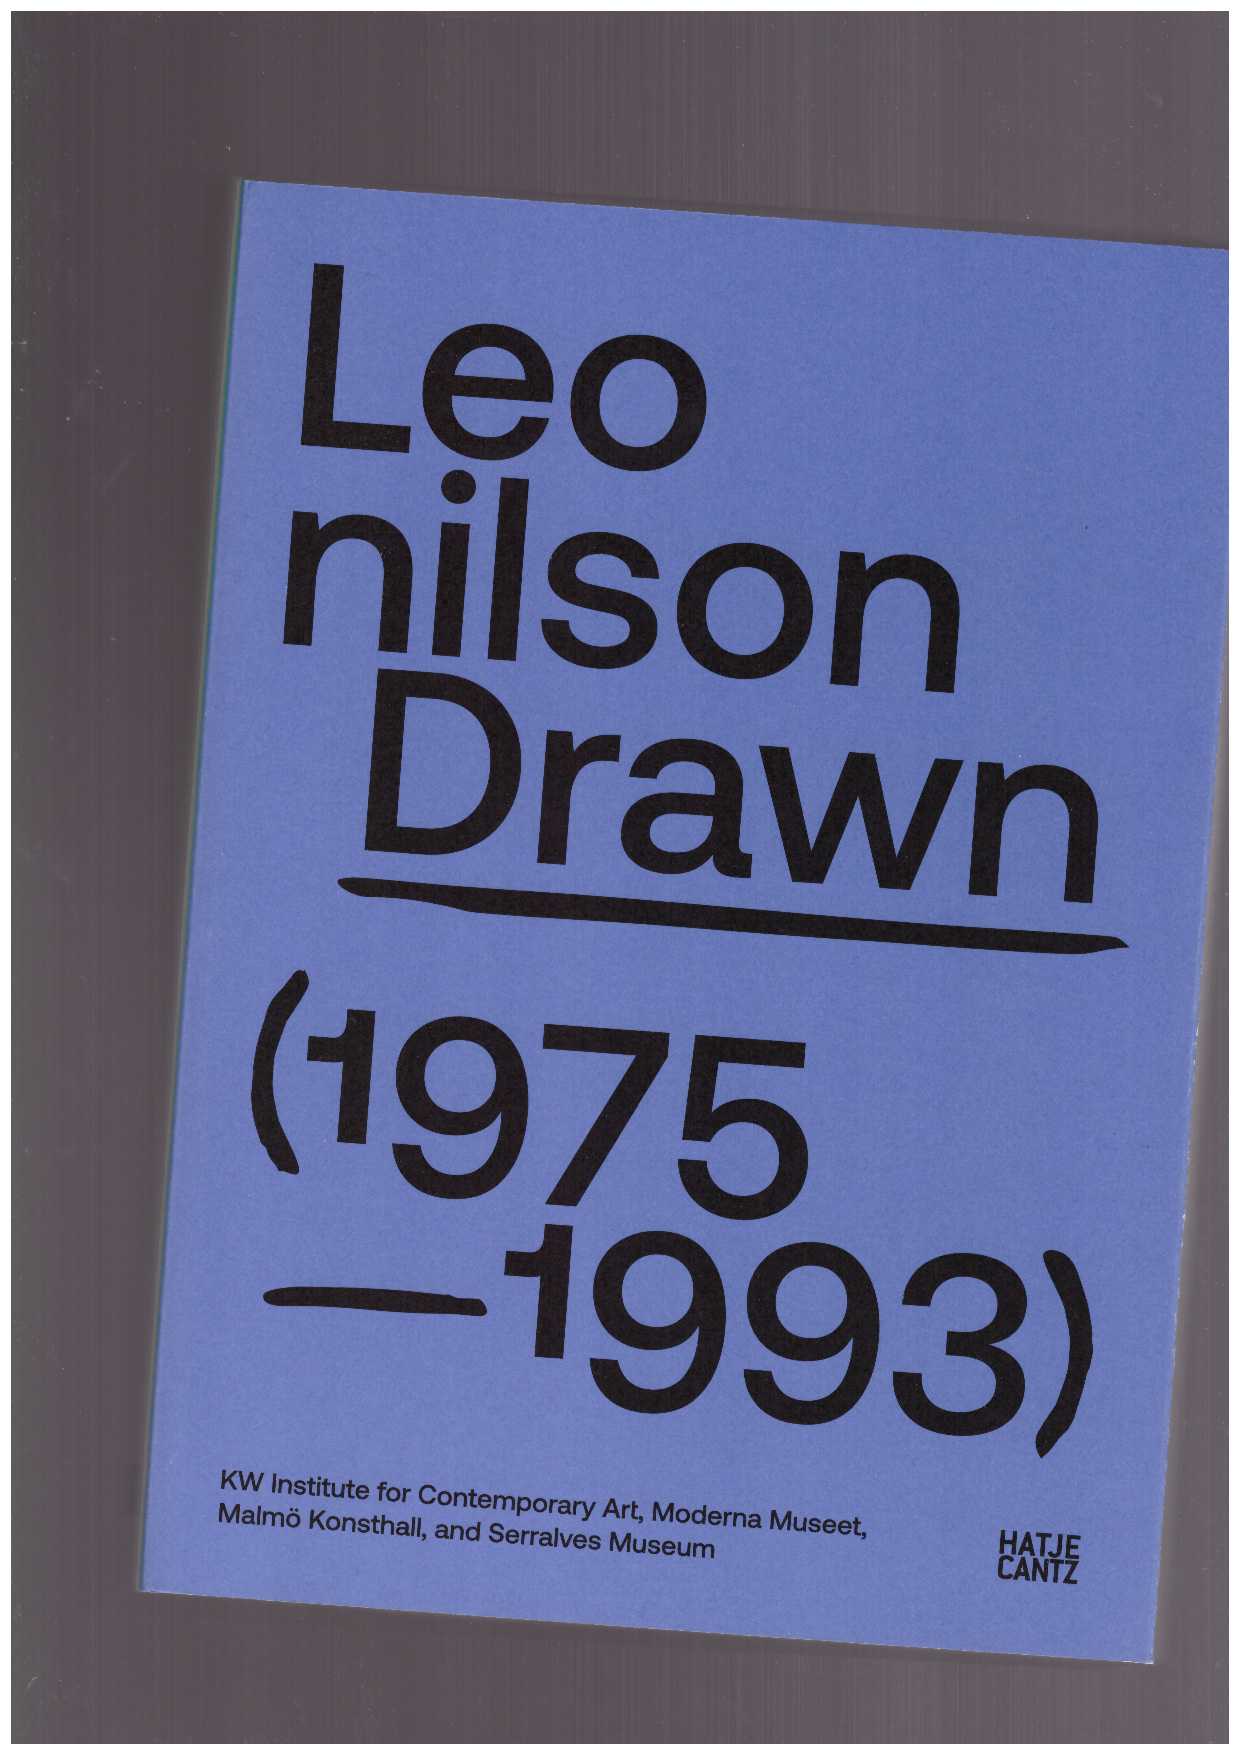 GRUIJTHUIJSEN, Krist ; ELDERTON, Louisa  - Leonilson: Drawn 1975–1993